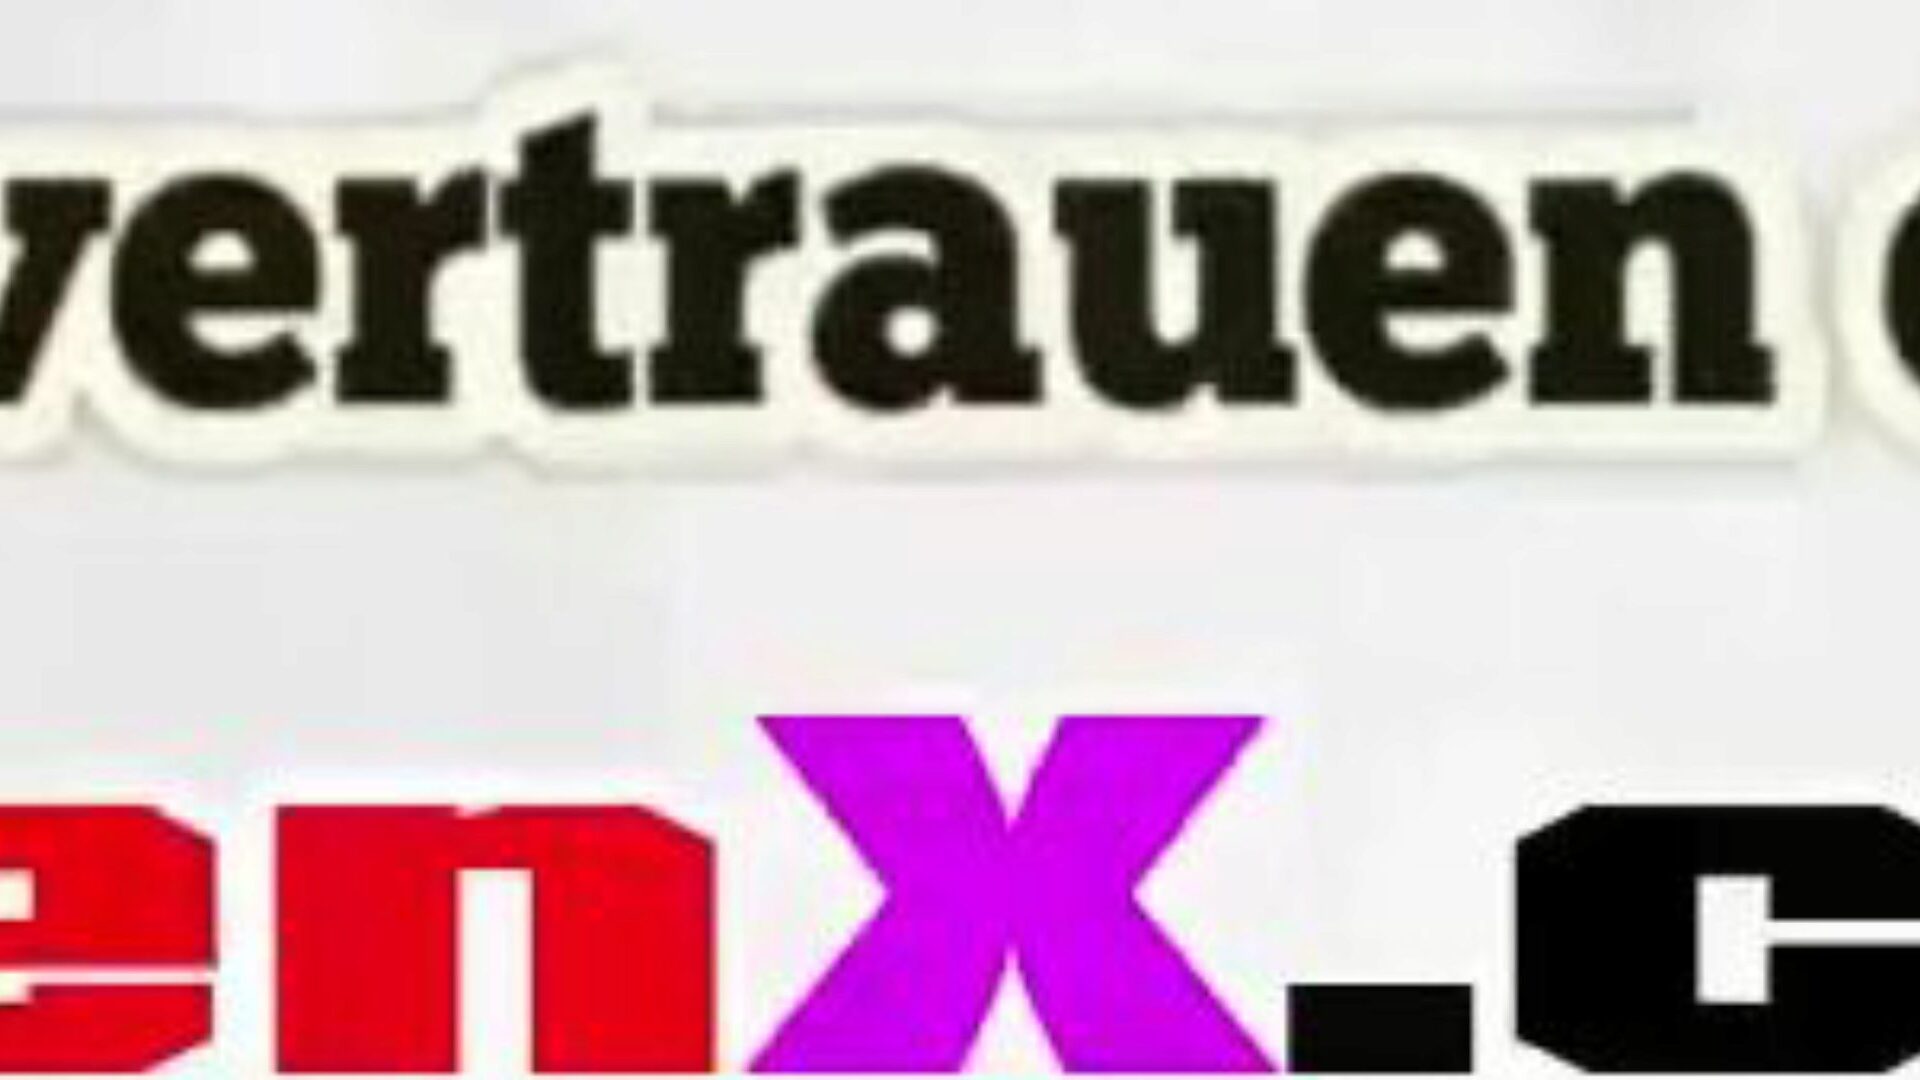 stiefmutter gefickt: free mutter jerman hd porn video f5 watch stiefmutter gefickt tube fuckfest video for free-for-all on xhamster, με την εκπληκτική συλλογή των γερμανικών mutter γερμανικών & mutter tochter hd porn videos